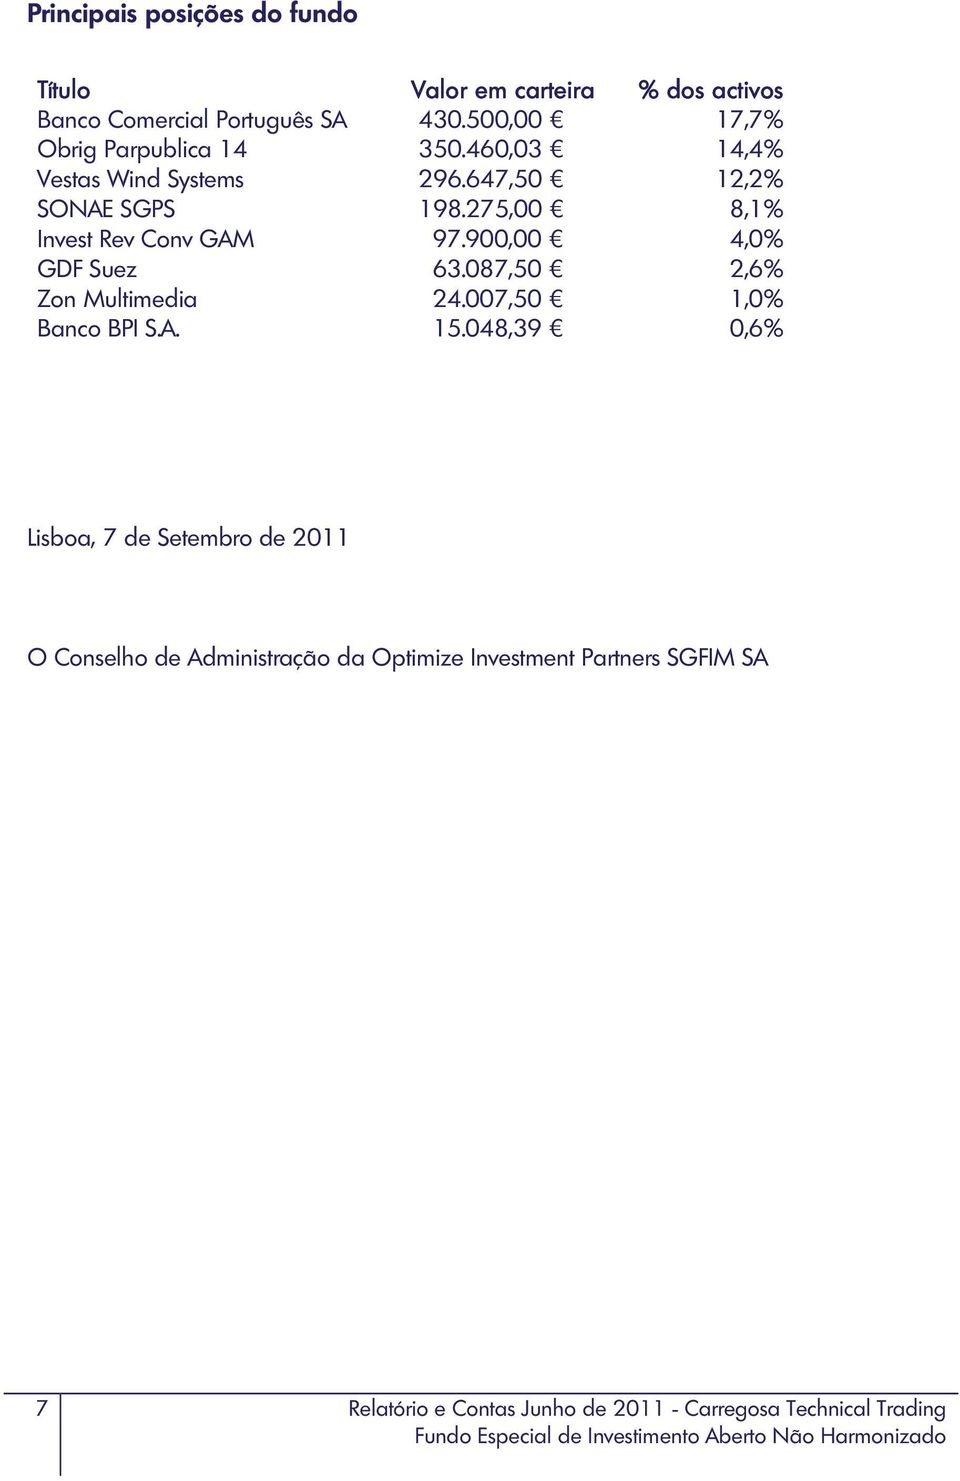 275,00 8,1% Invest Rev Conv GAM 97.900,00 4,0% GDF Suez 63.087,50 2,6% Zon Multimedia 24.007,50 1,0% Banco BPI S.A. 15.